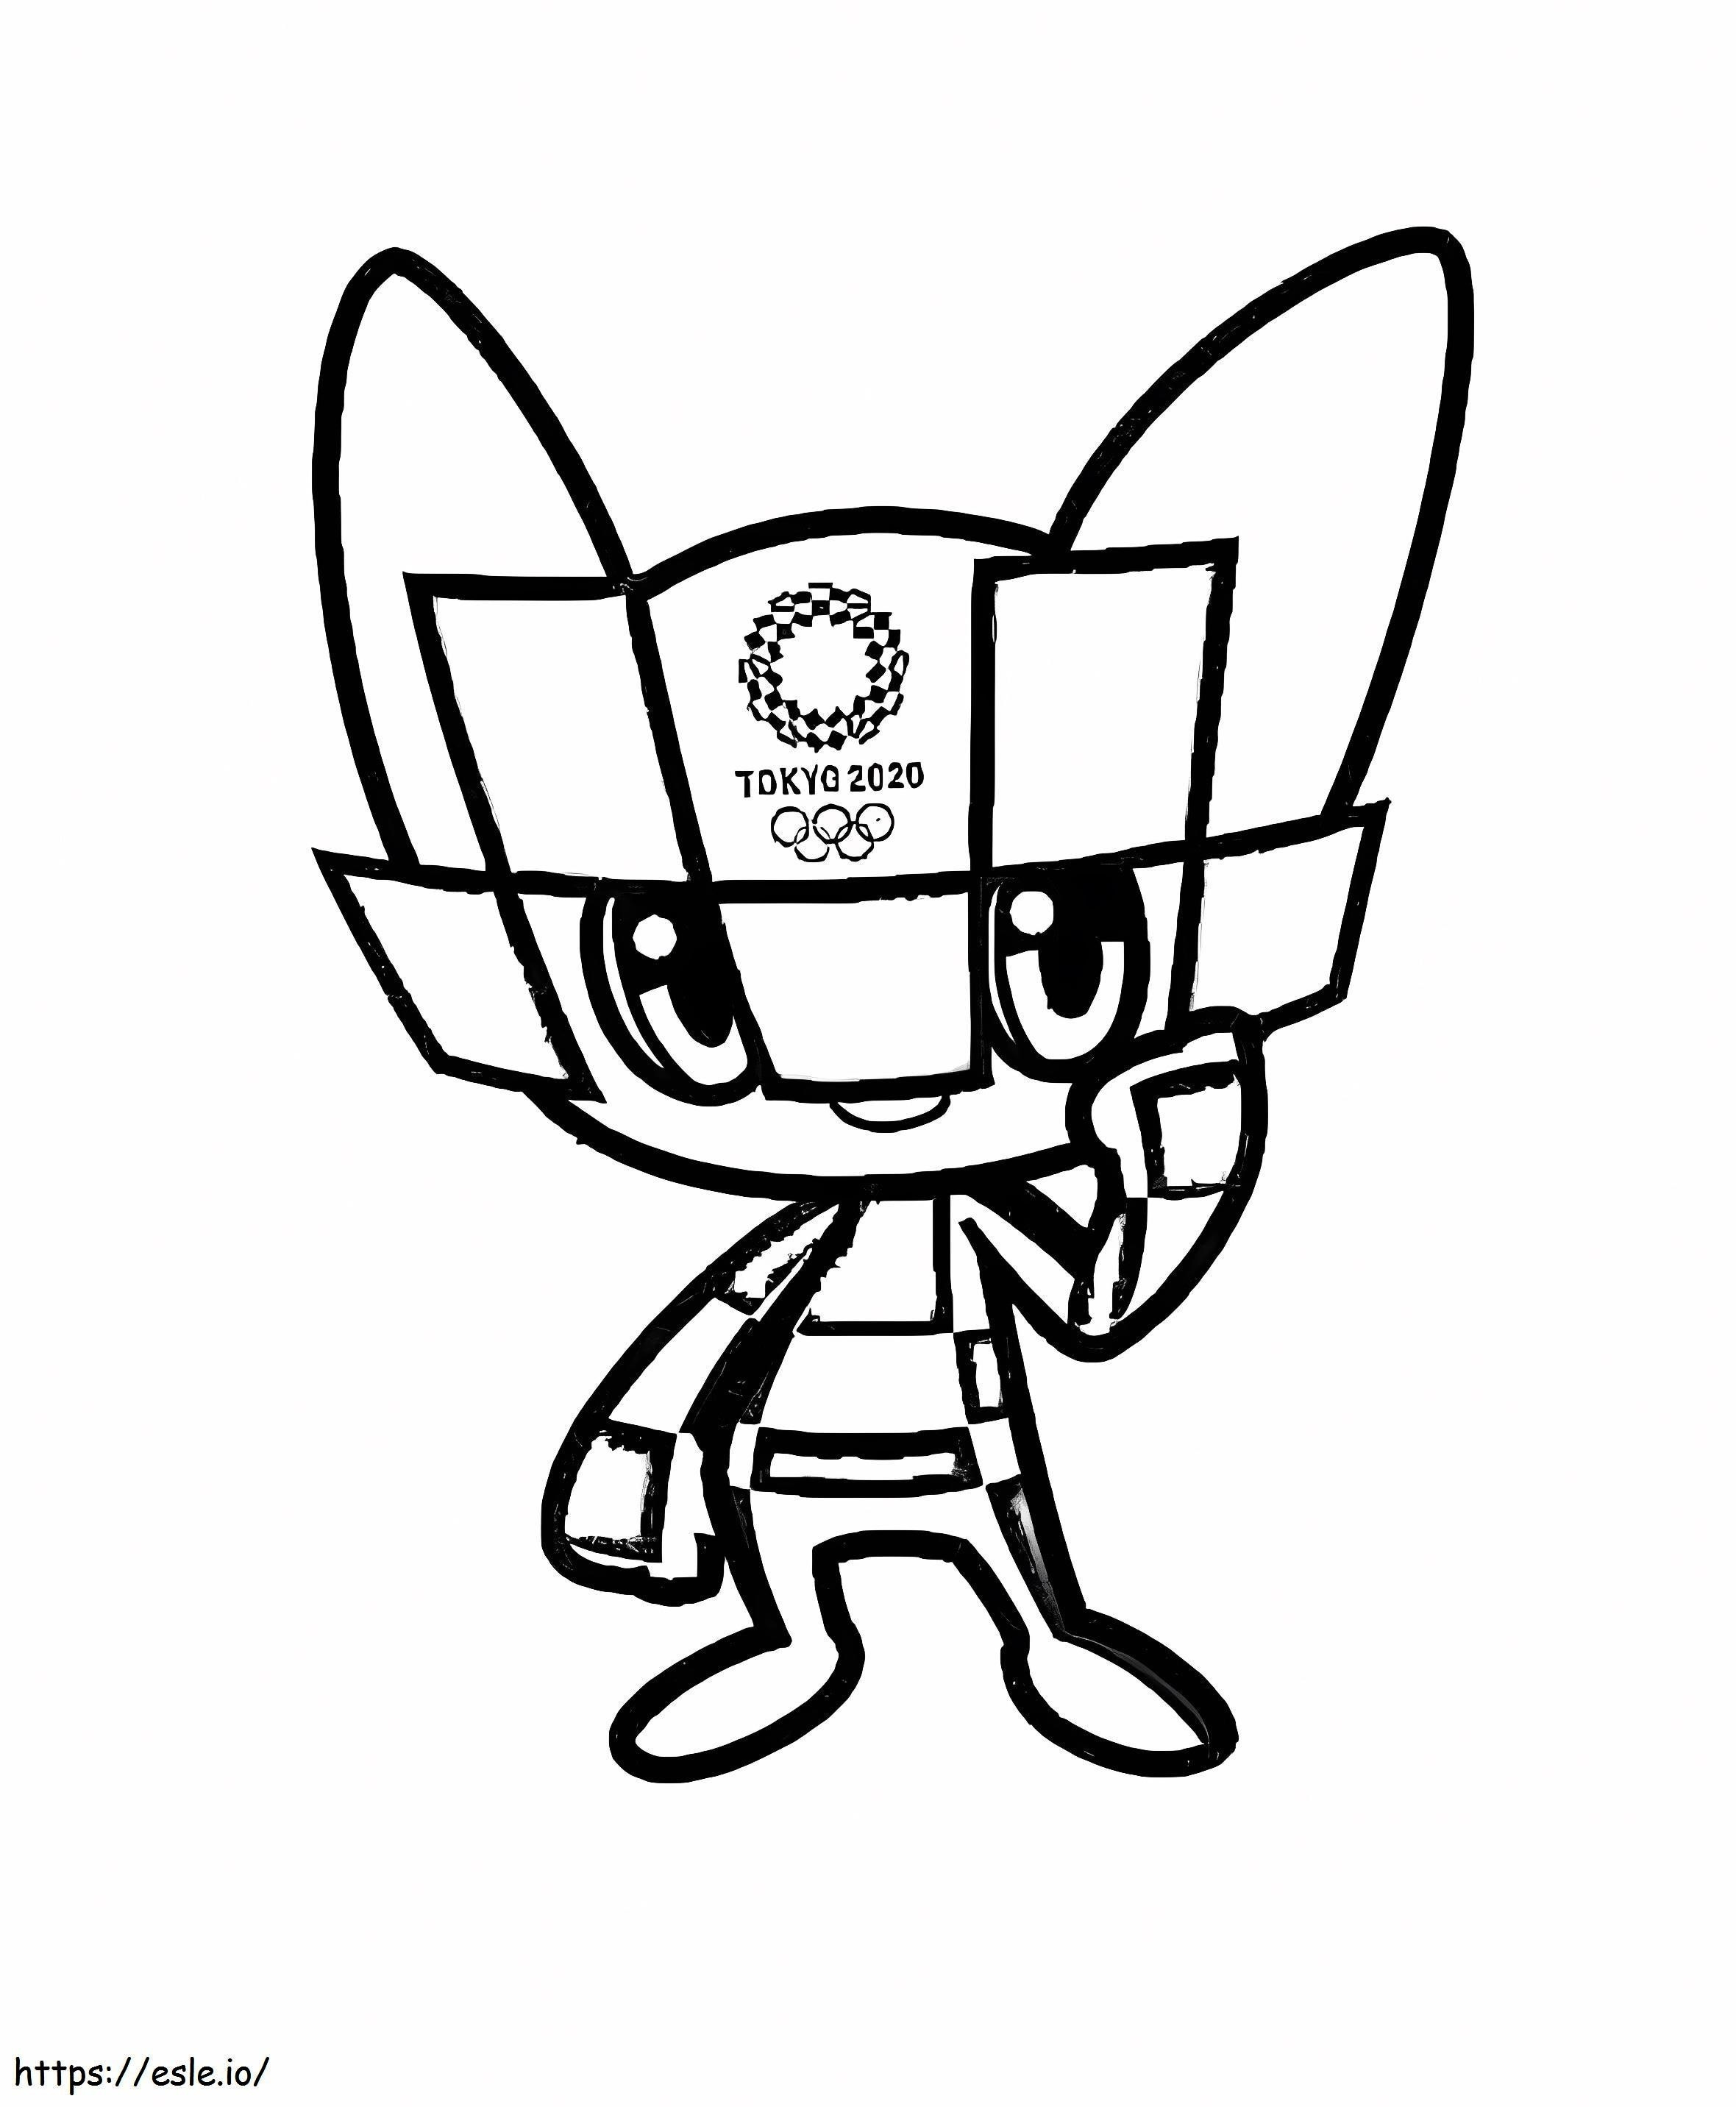 Miraitowa Olympics 2020 coloring page